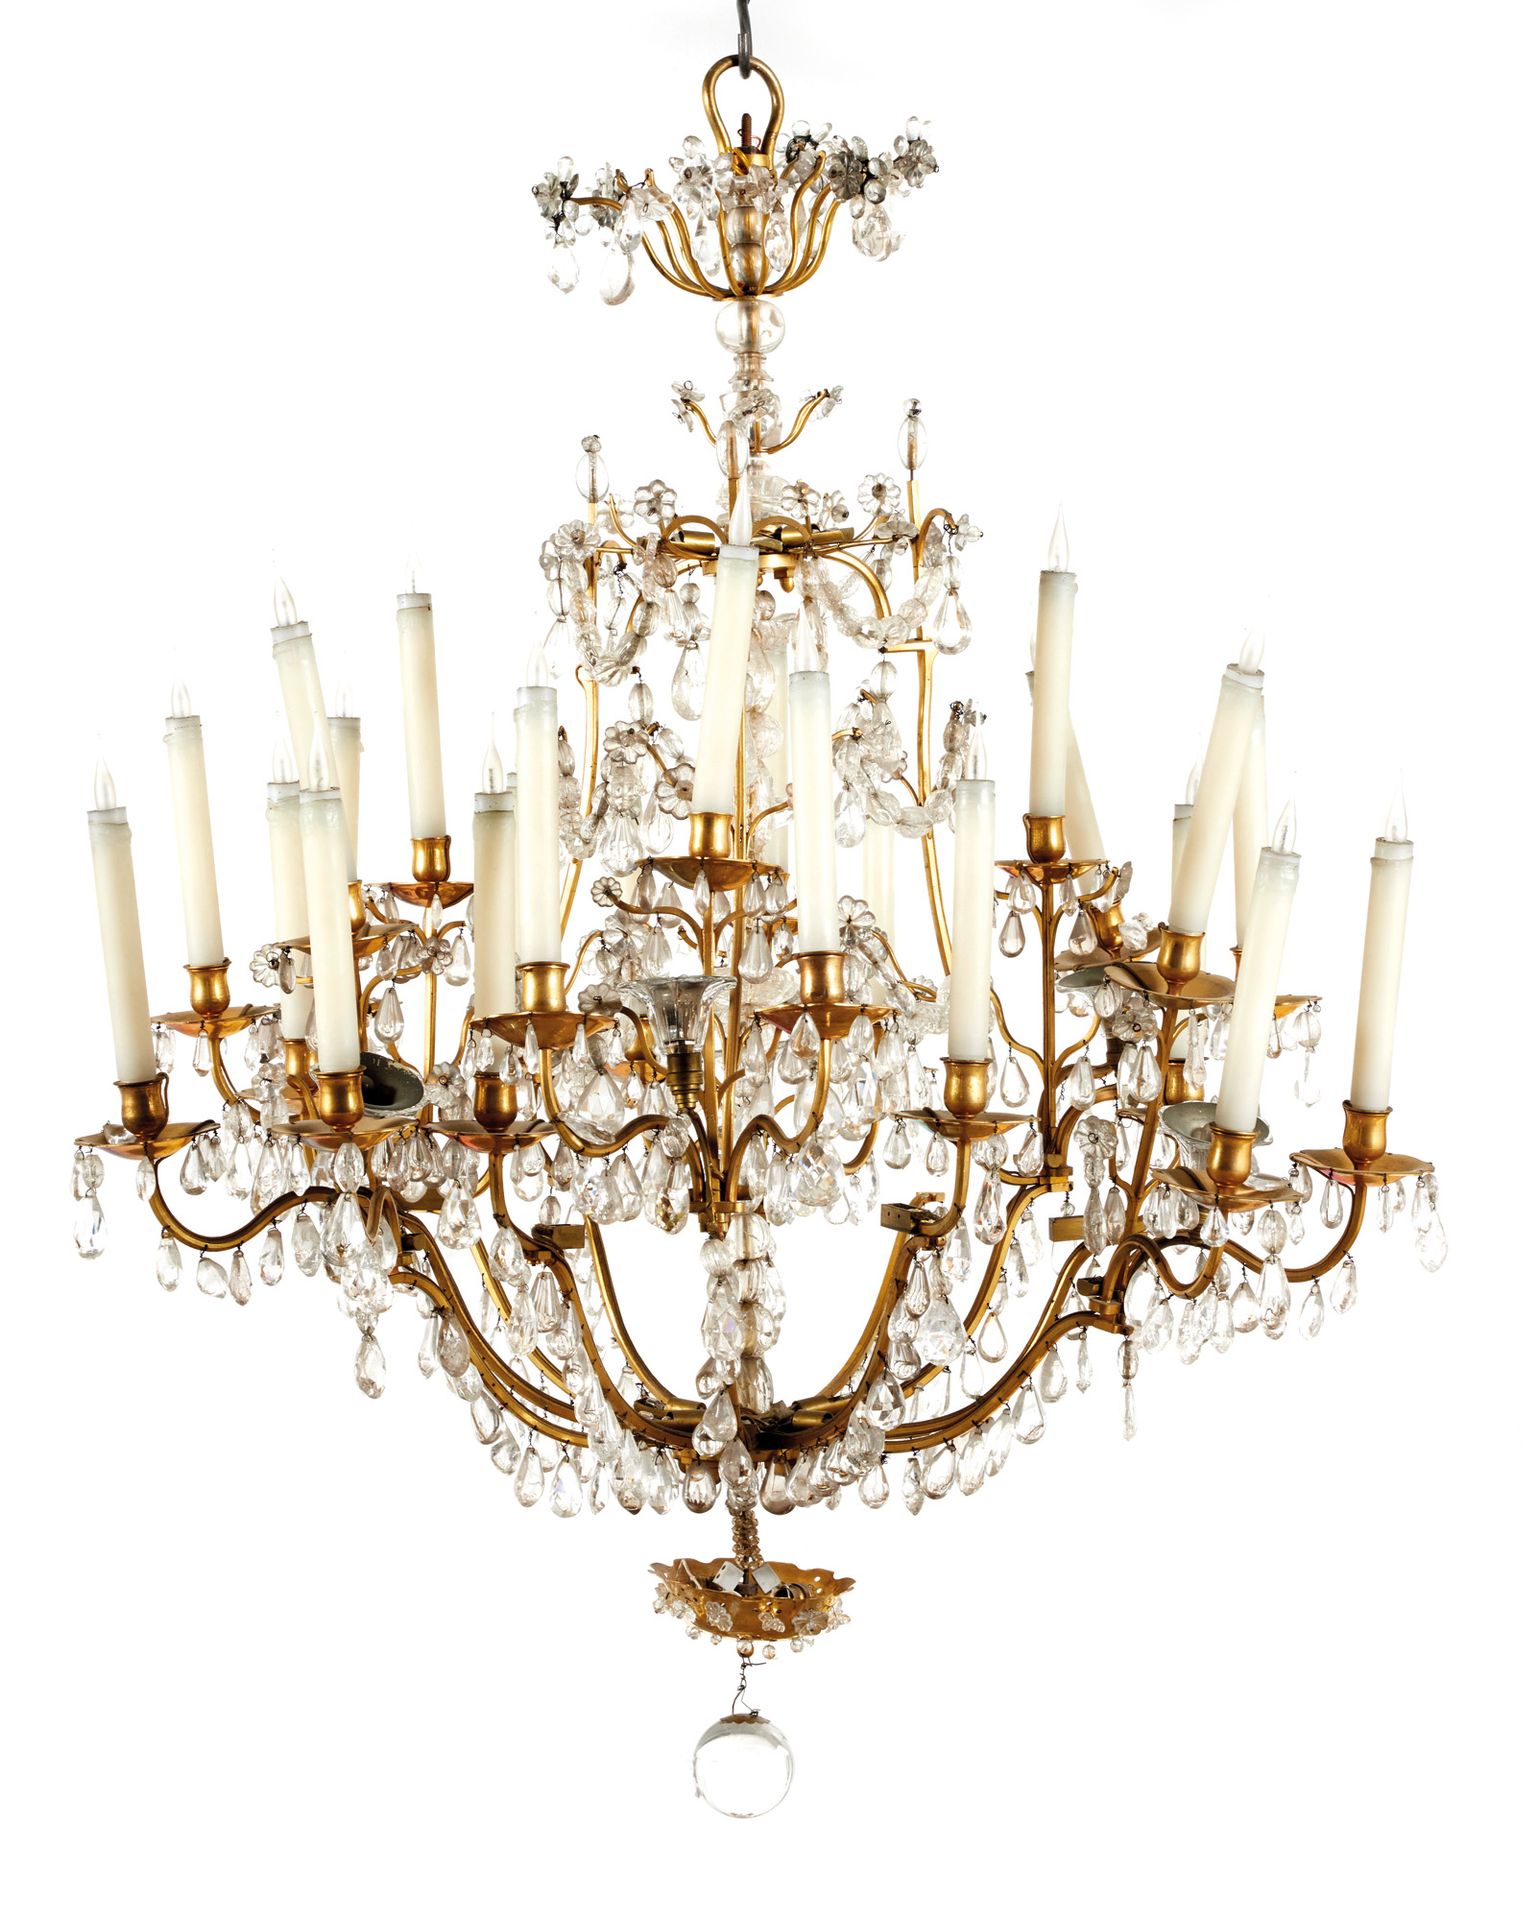 Lustre 枝形吊灯
有二十四根铜制的灯枝，装饰有吊坠和切割水晶花环。 
路易十五风格
高度：115厘米；宽度：91厘米